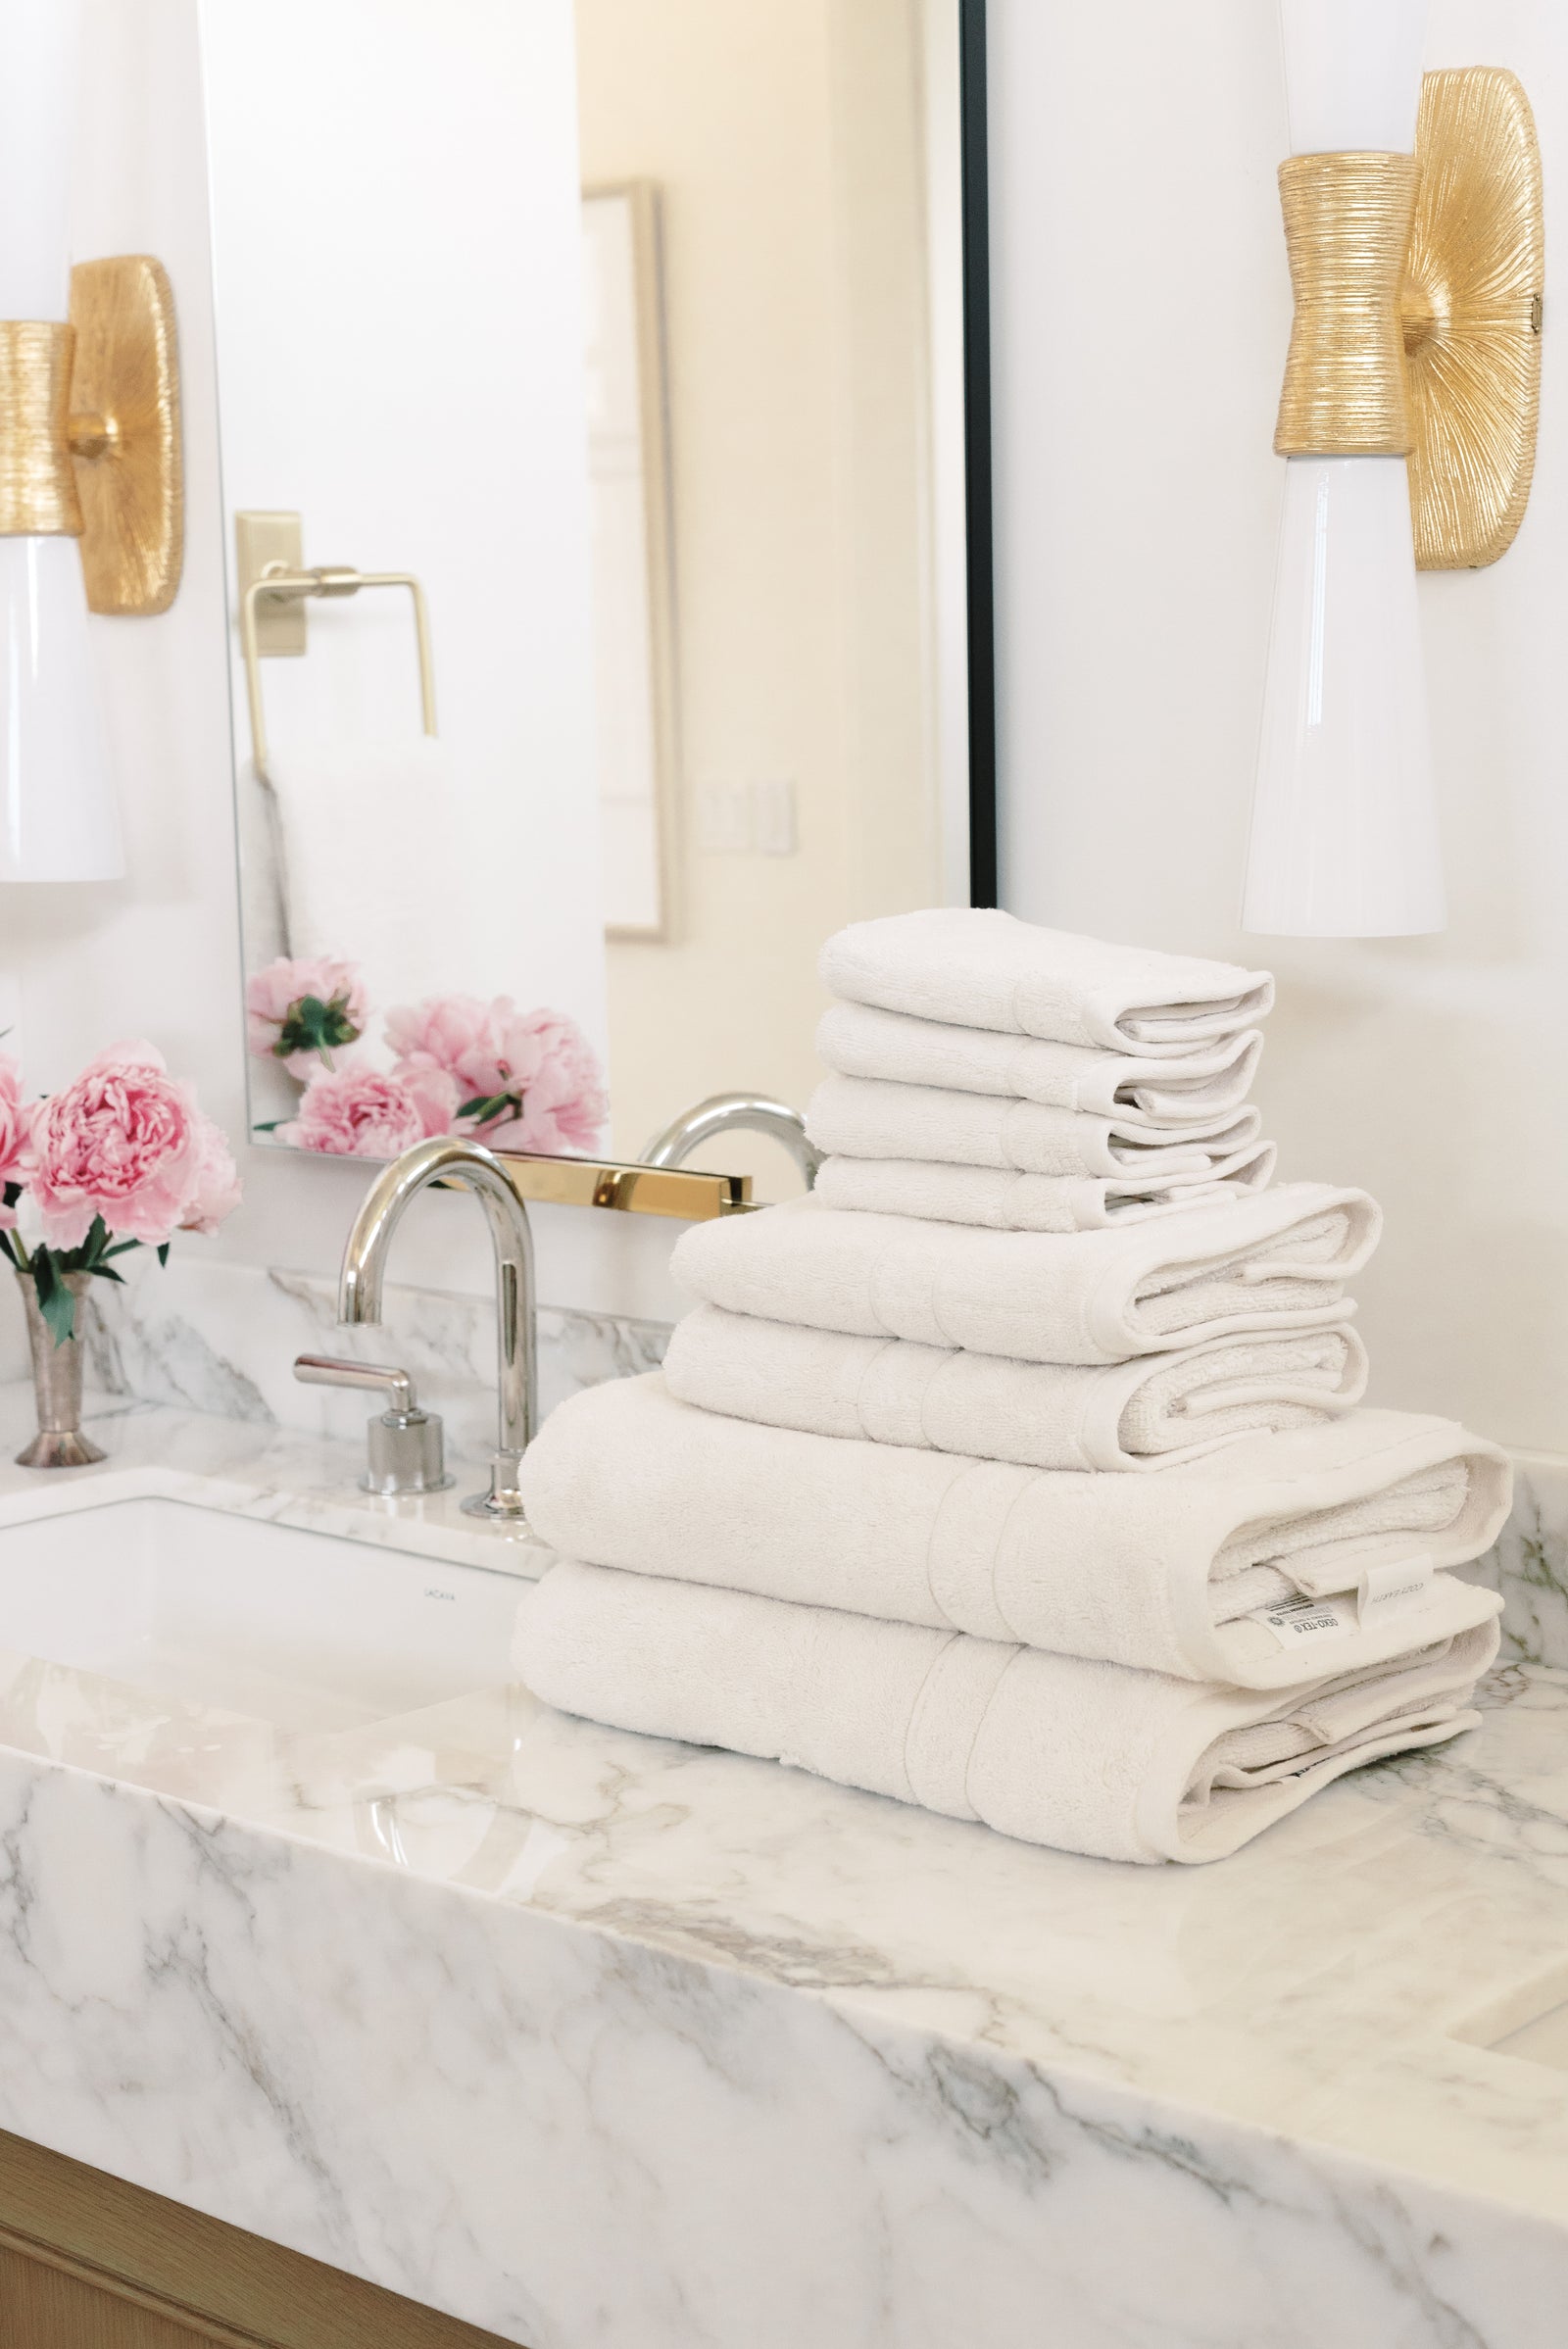 Premium Plush Bath Towel Set in the color Seashell. Photo of Clay Premium Plush Bath Towel Set taken in a bathroom featuring white backsplash tile 